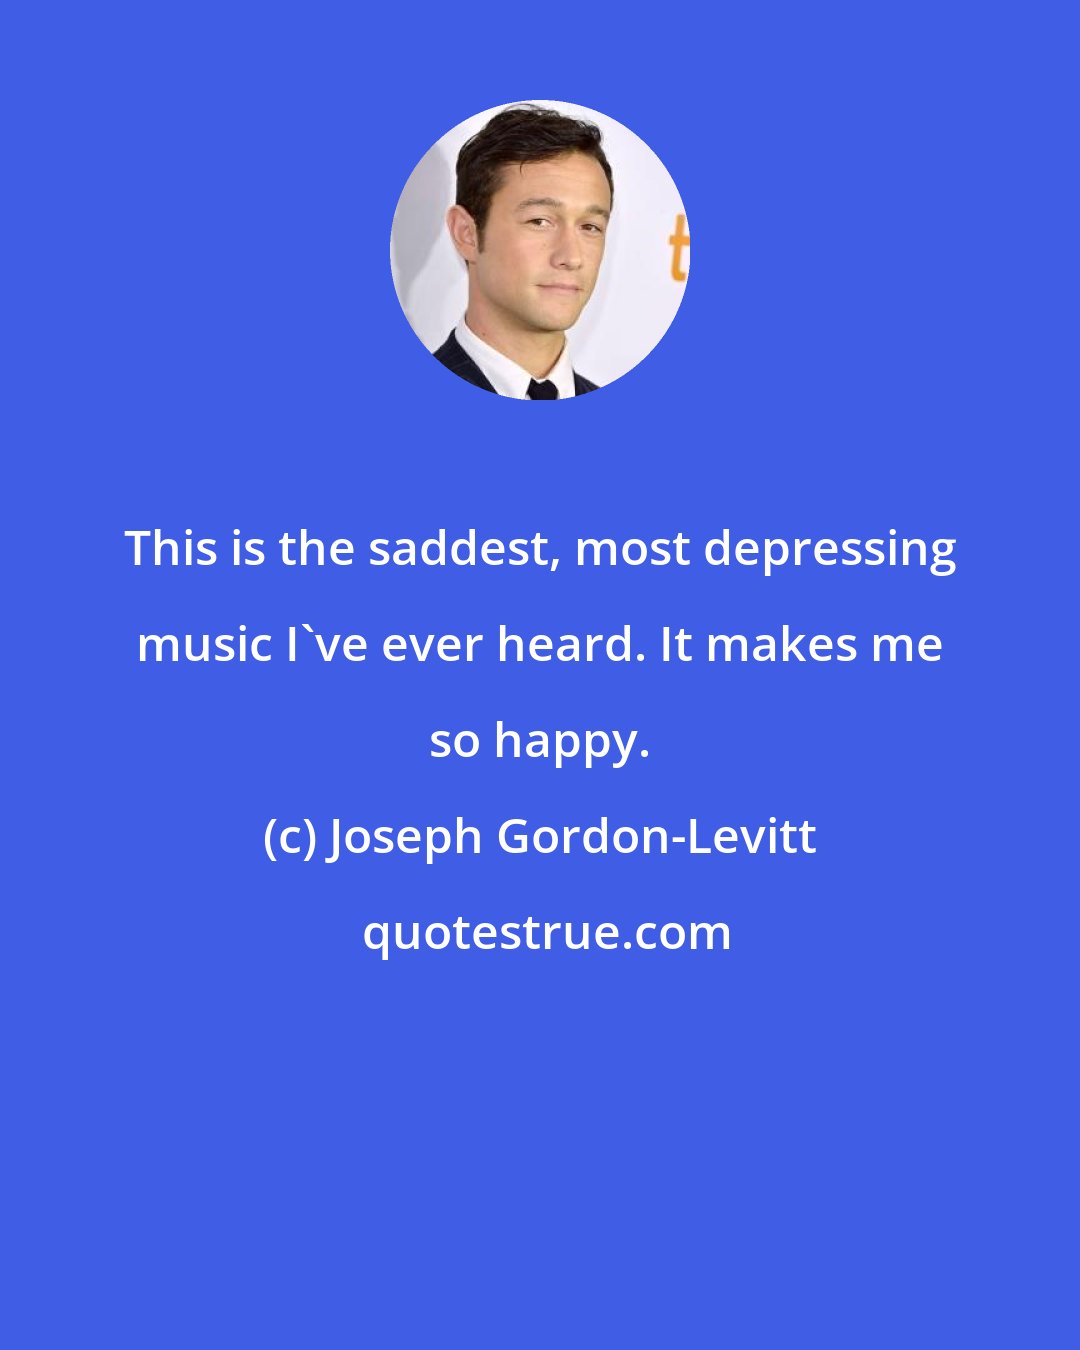 Joseph Gordon-Levitt: This is the saddest, most depressing music I've ever heard. It makes me so happy.